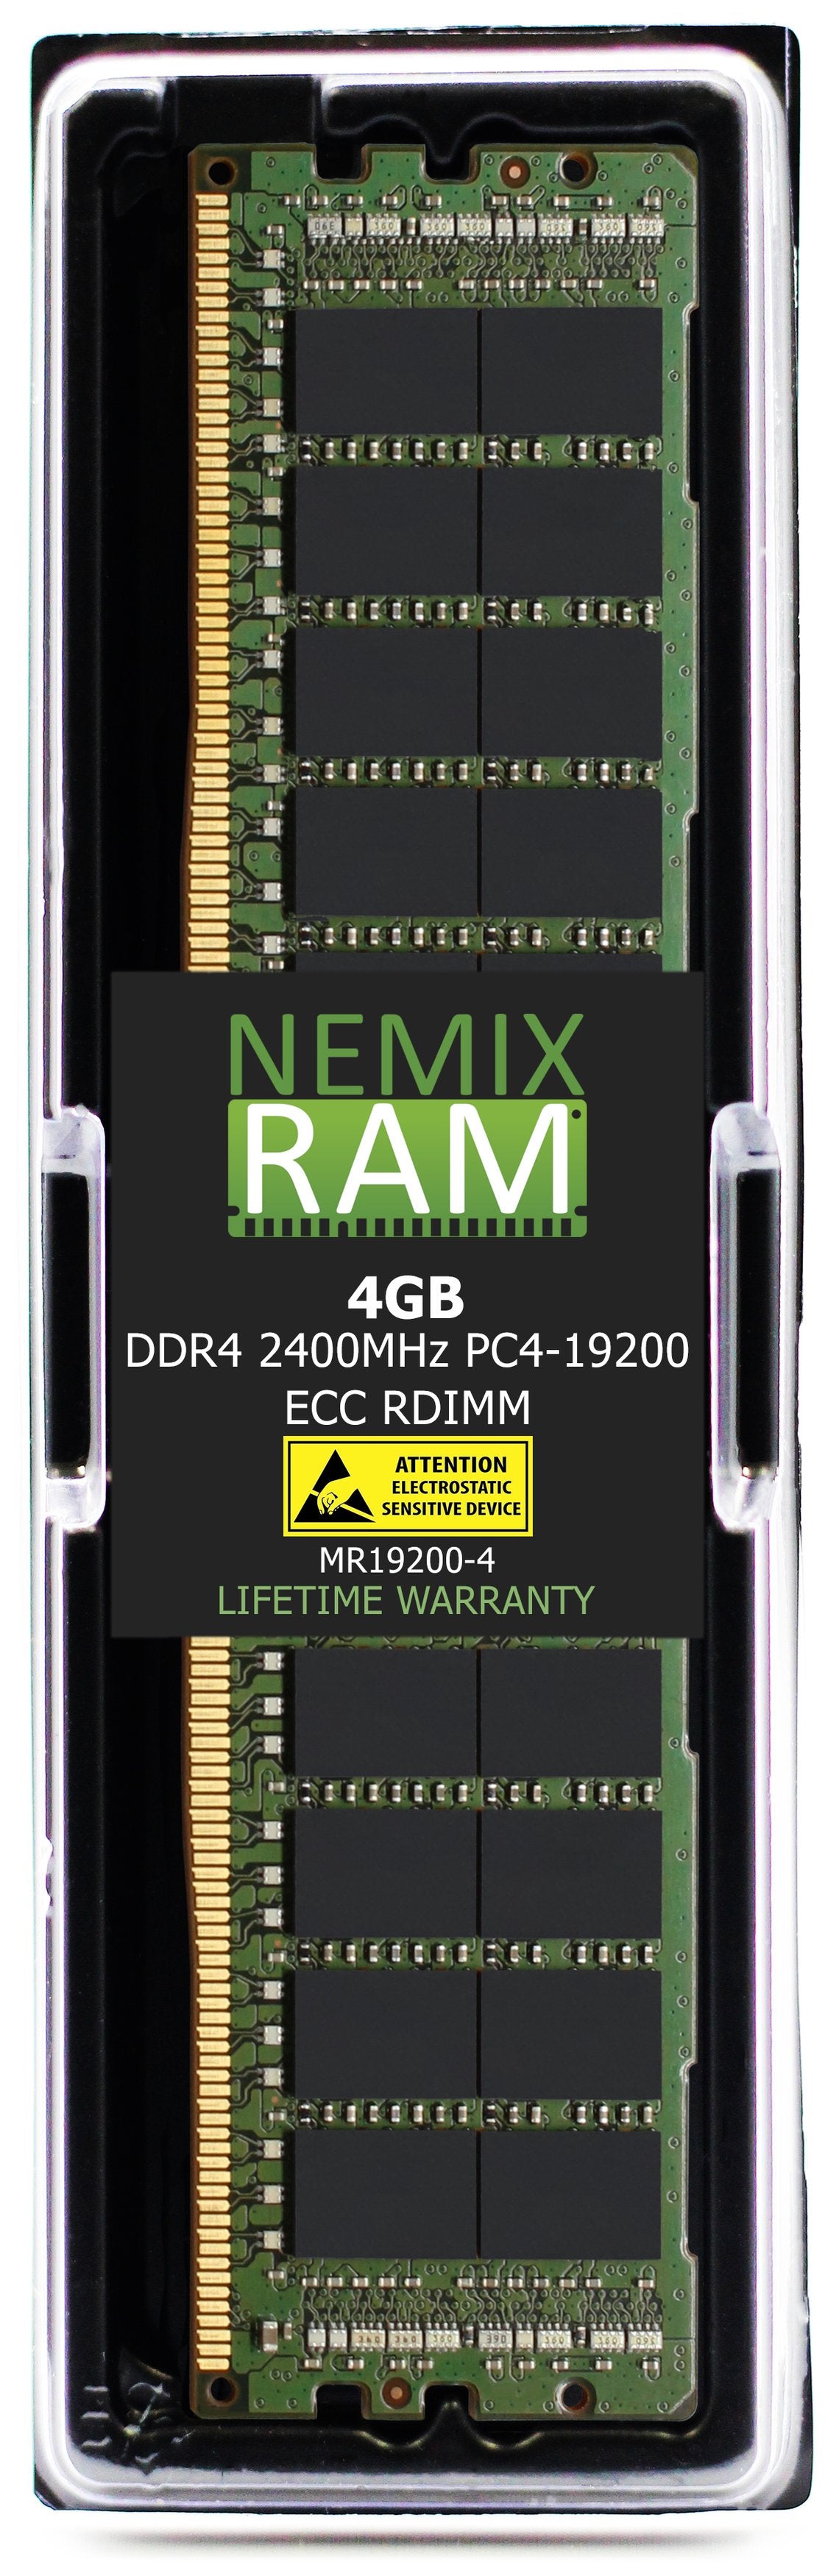 8GB DDR4 2400MHZ PC4-19200 RDIMM Compatible with Supermicro MEM-DR480L-HL01-ER24